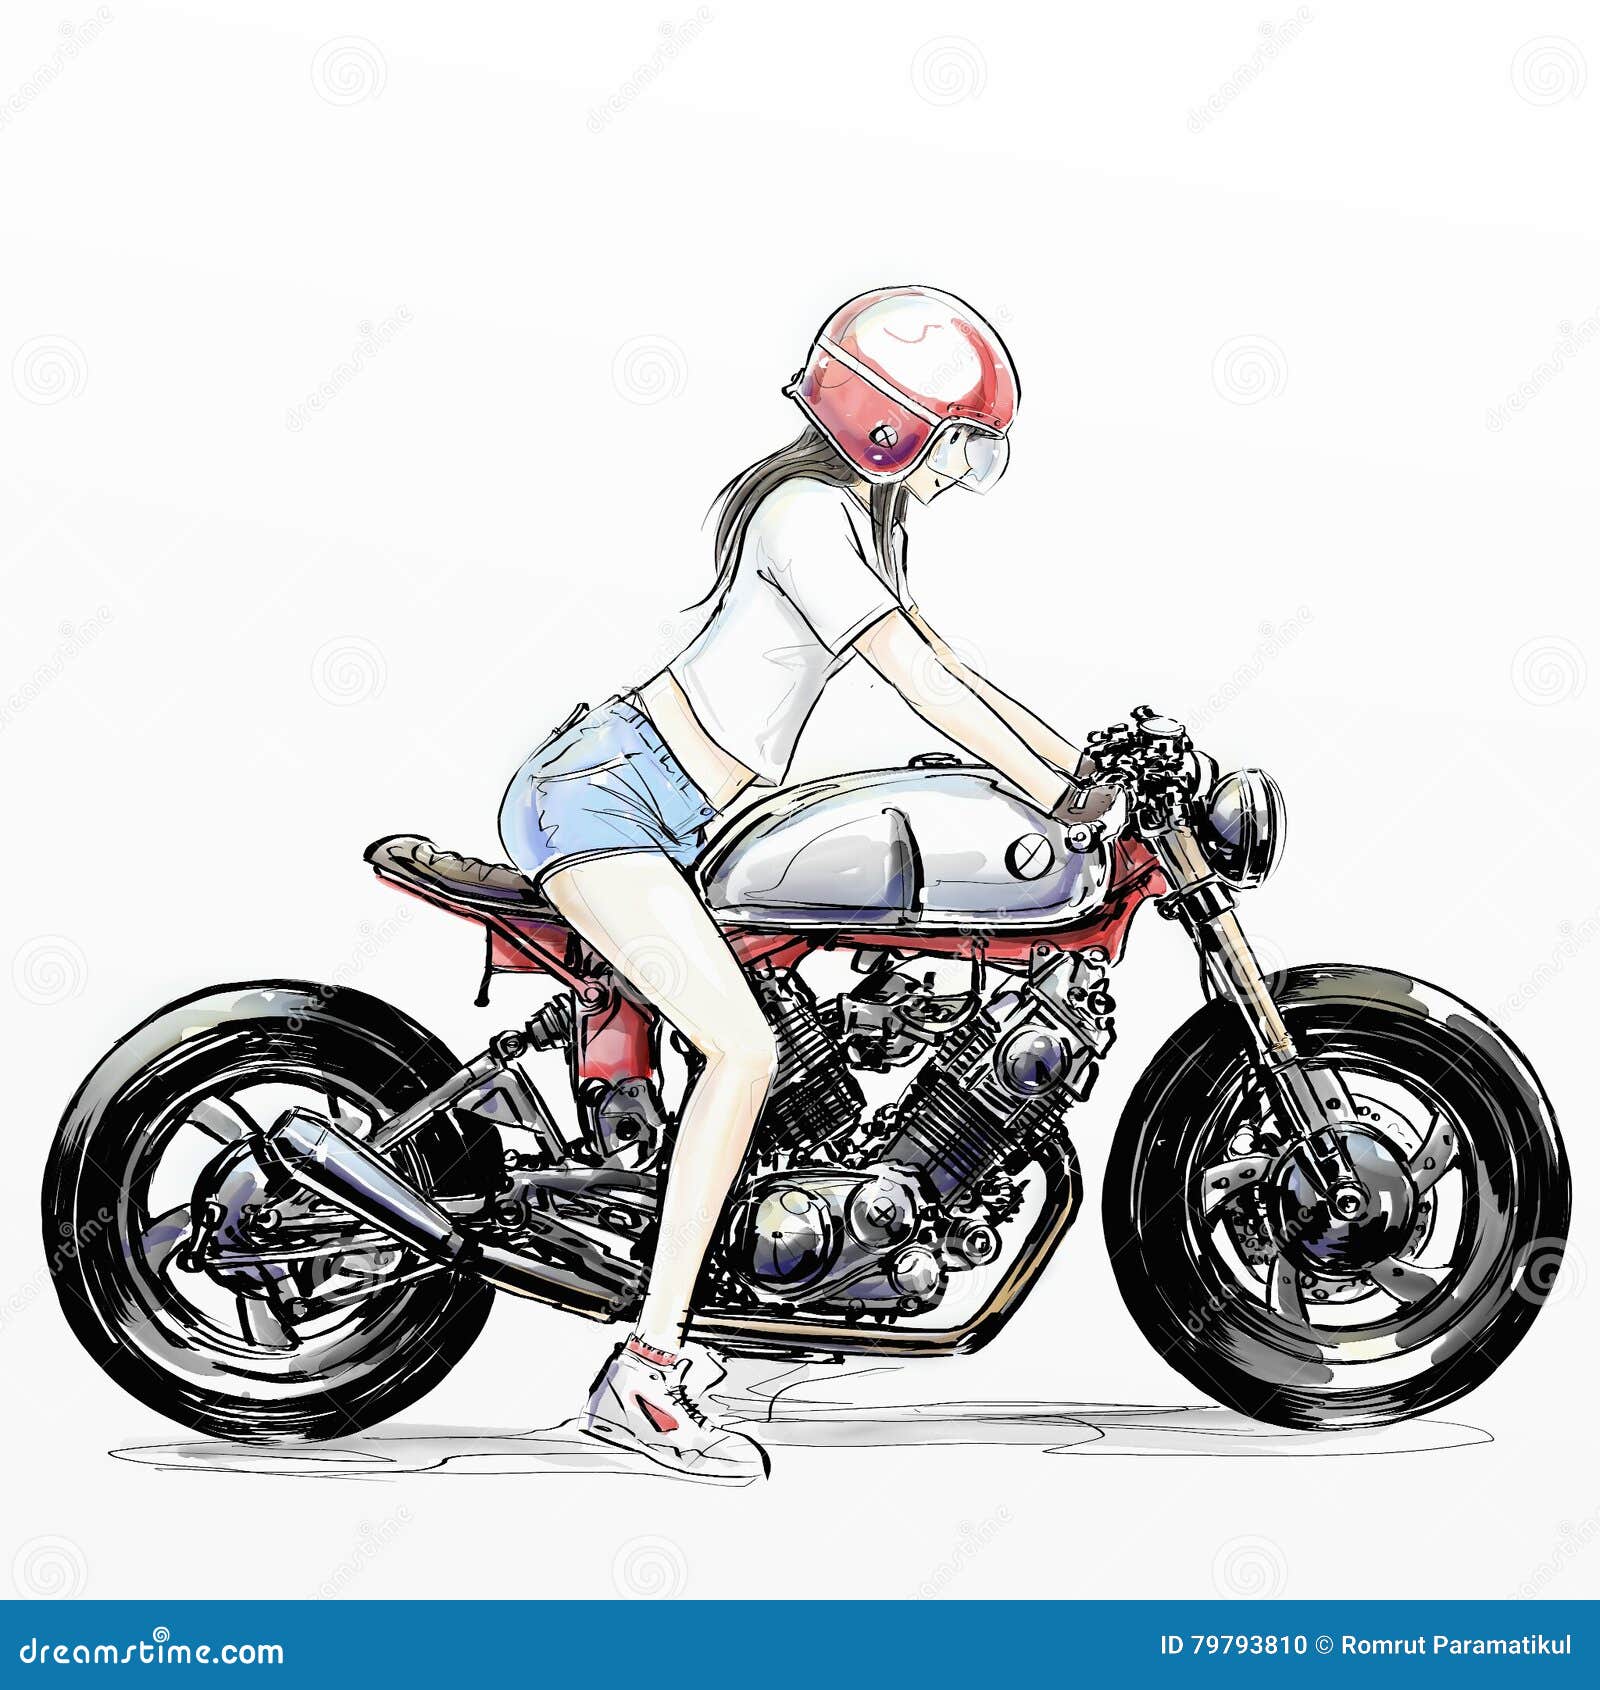 Cute Cartoon Girl Riding Motorcycle Illustration 79793810 - Megapixl